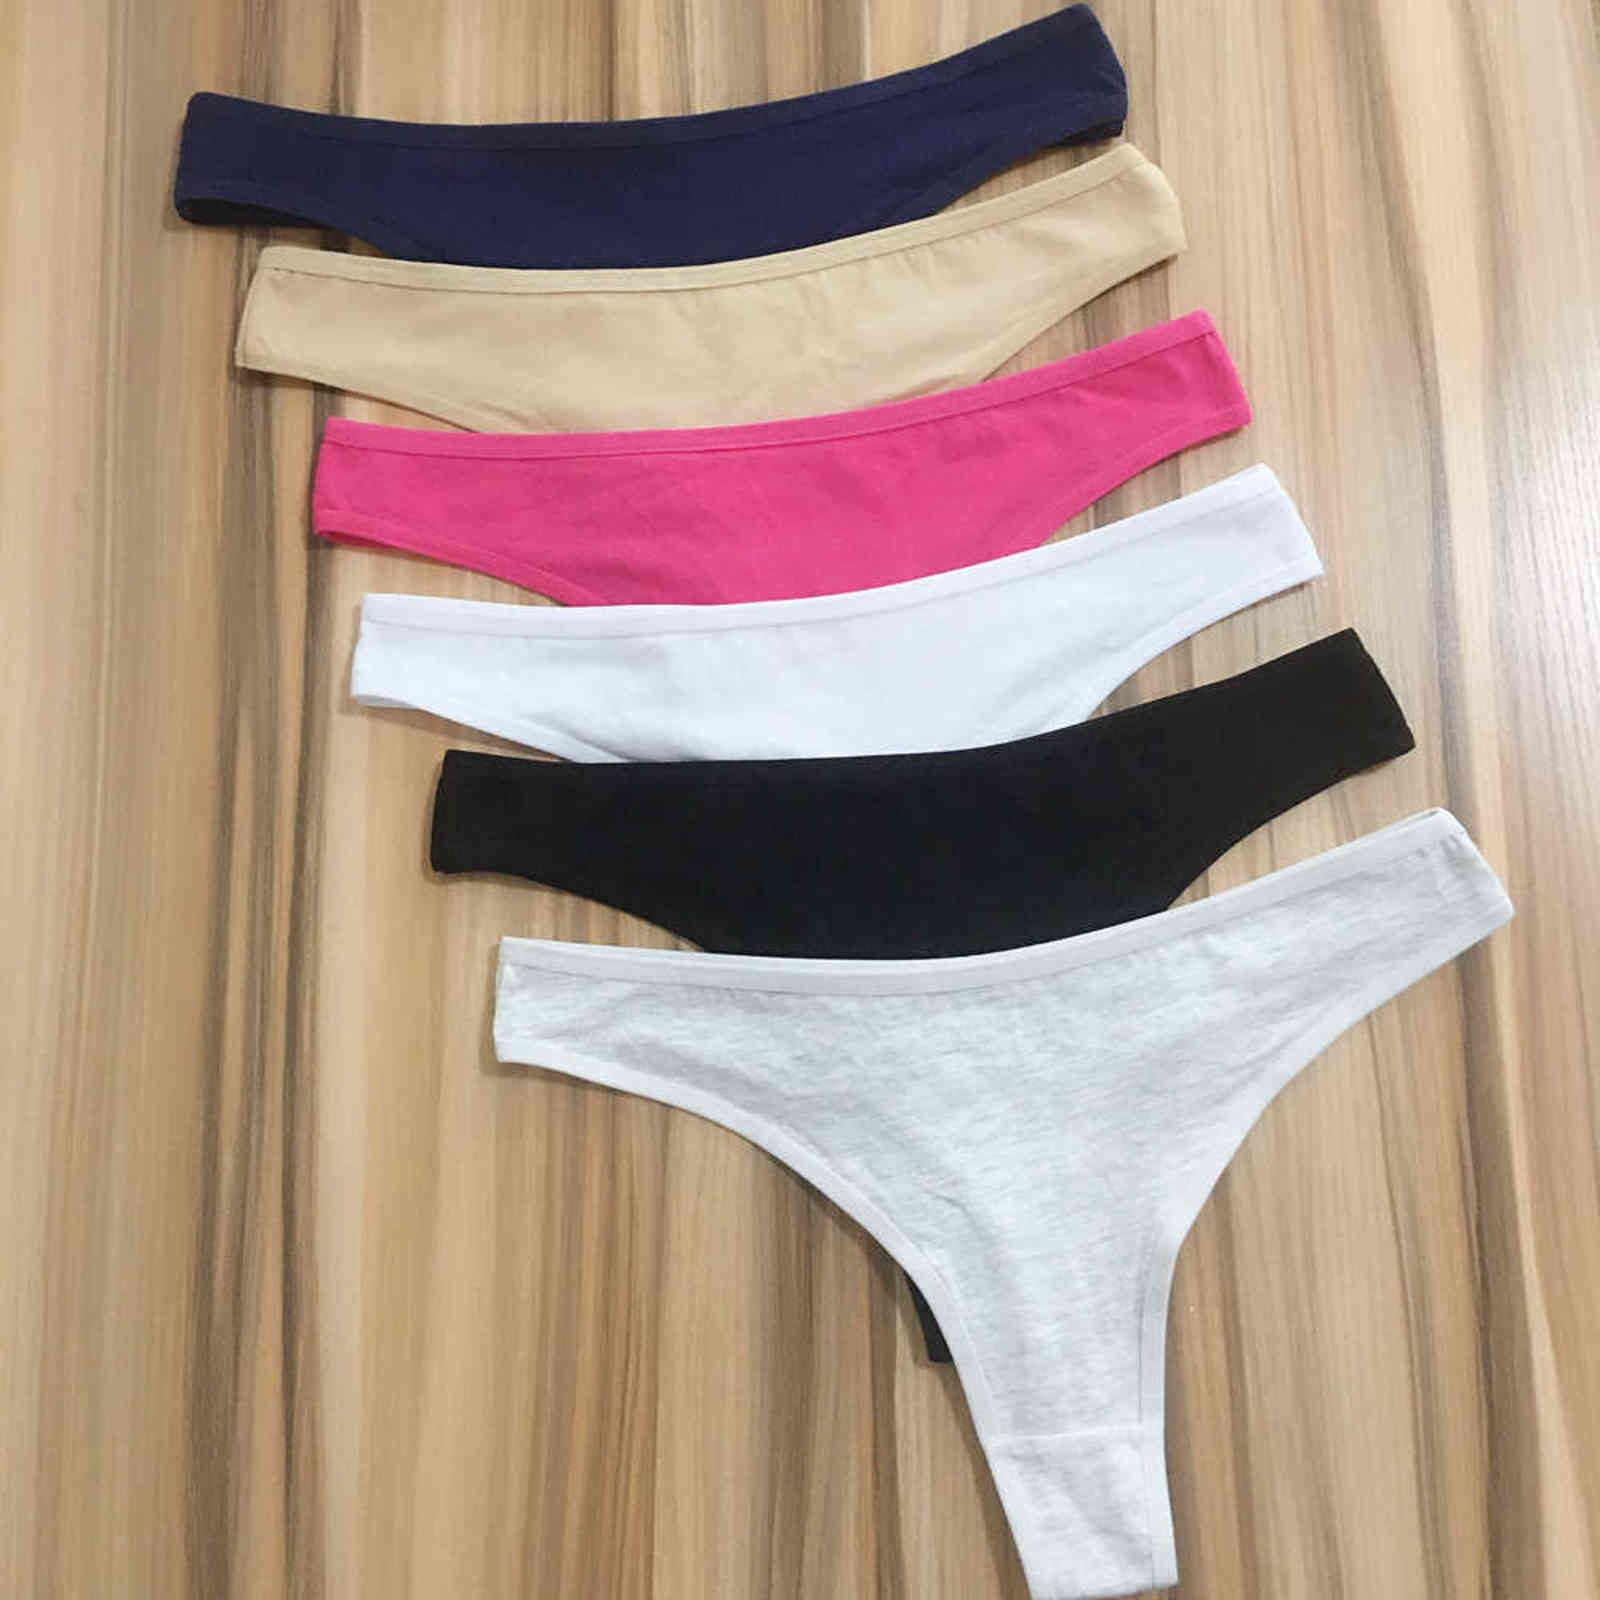 

6 Pieces Cotton Thong Panties Women Underpants Plus Size XXL Solid Color Underwear Female Comfortable G String Lingerie Tanga 211109, White